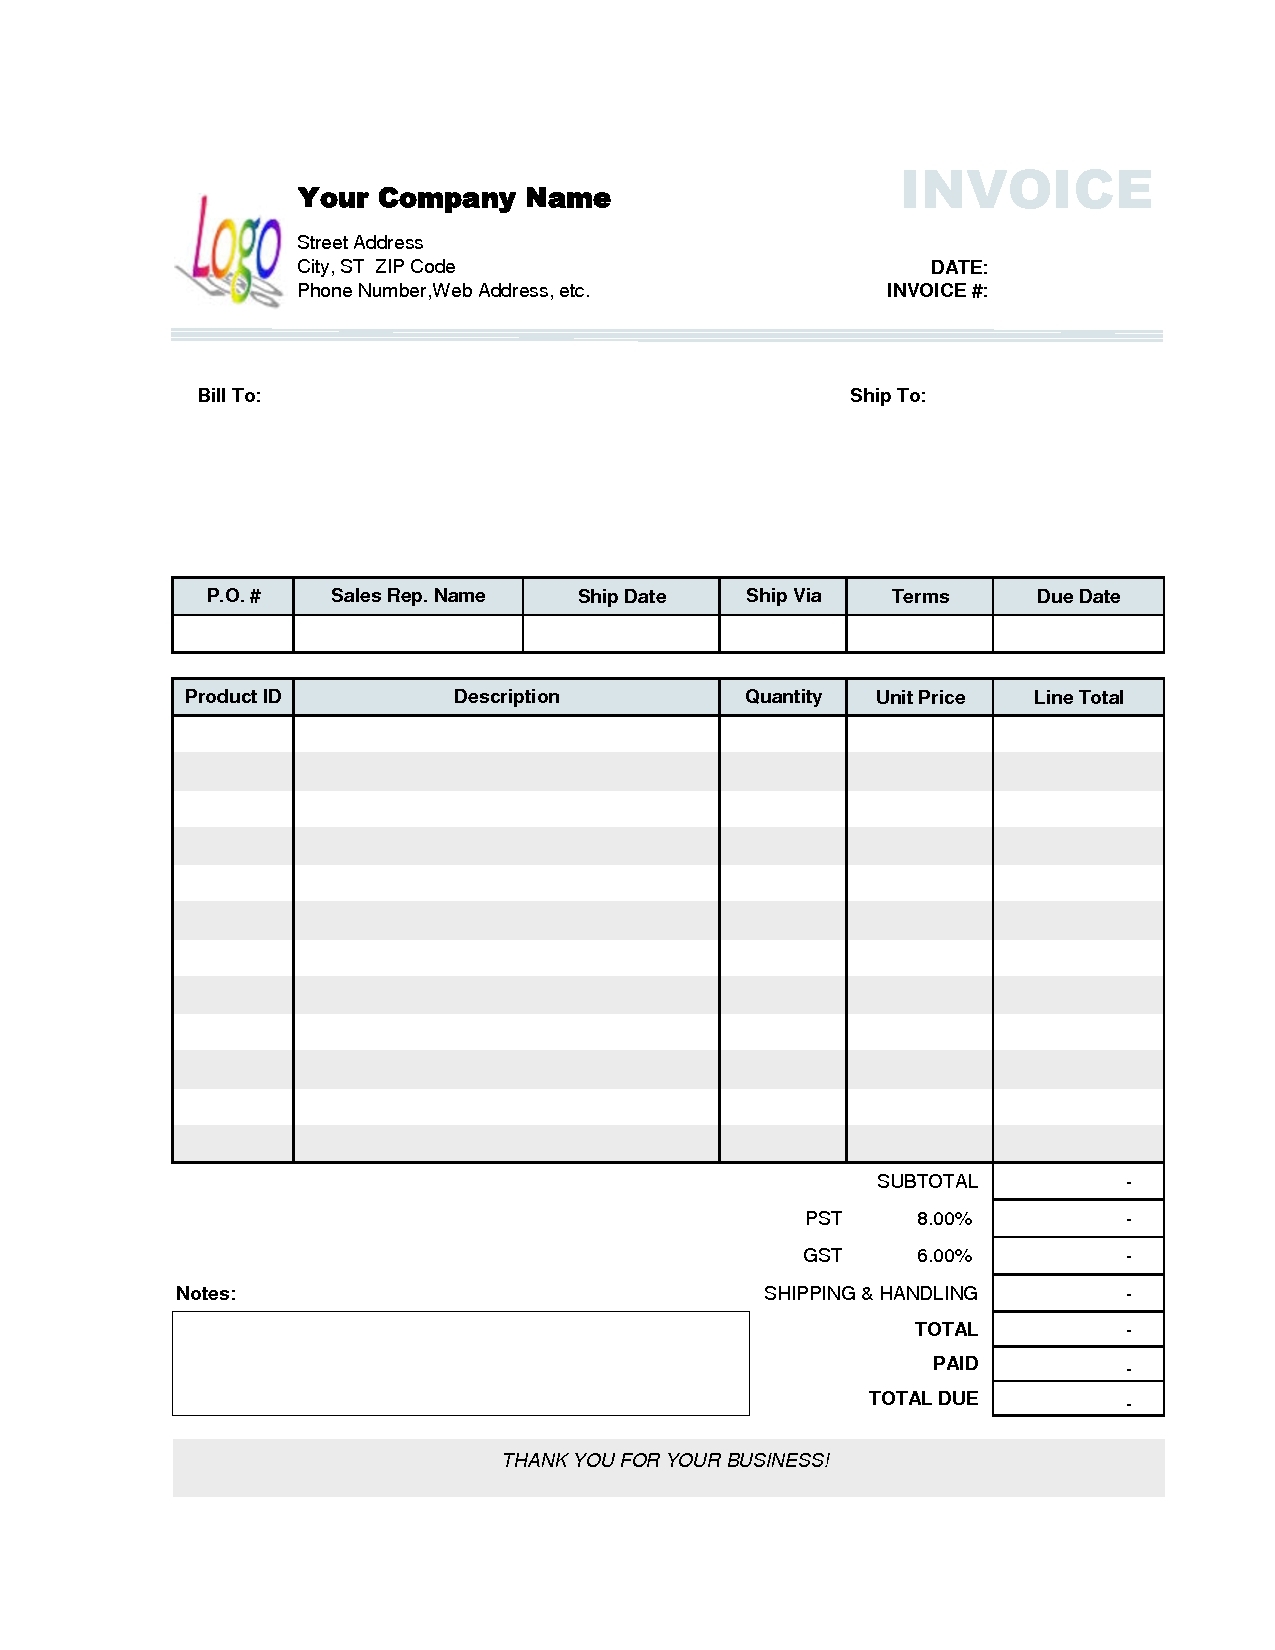 company invoice sample invoice template free 2016 company invoice template